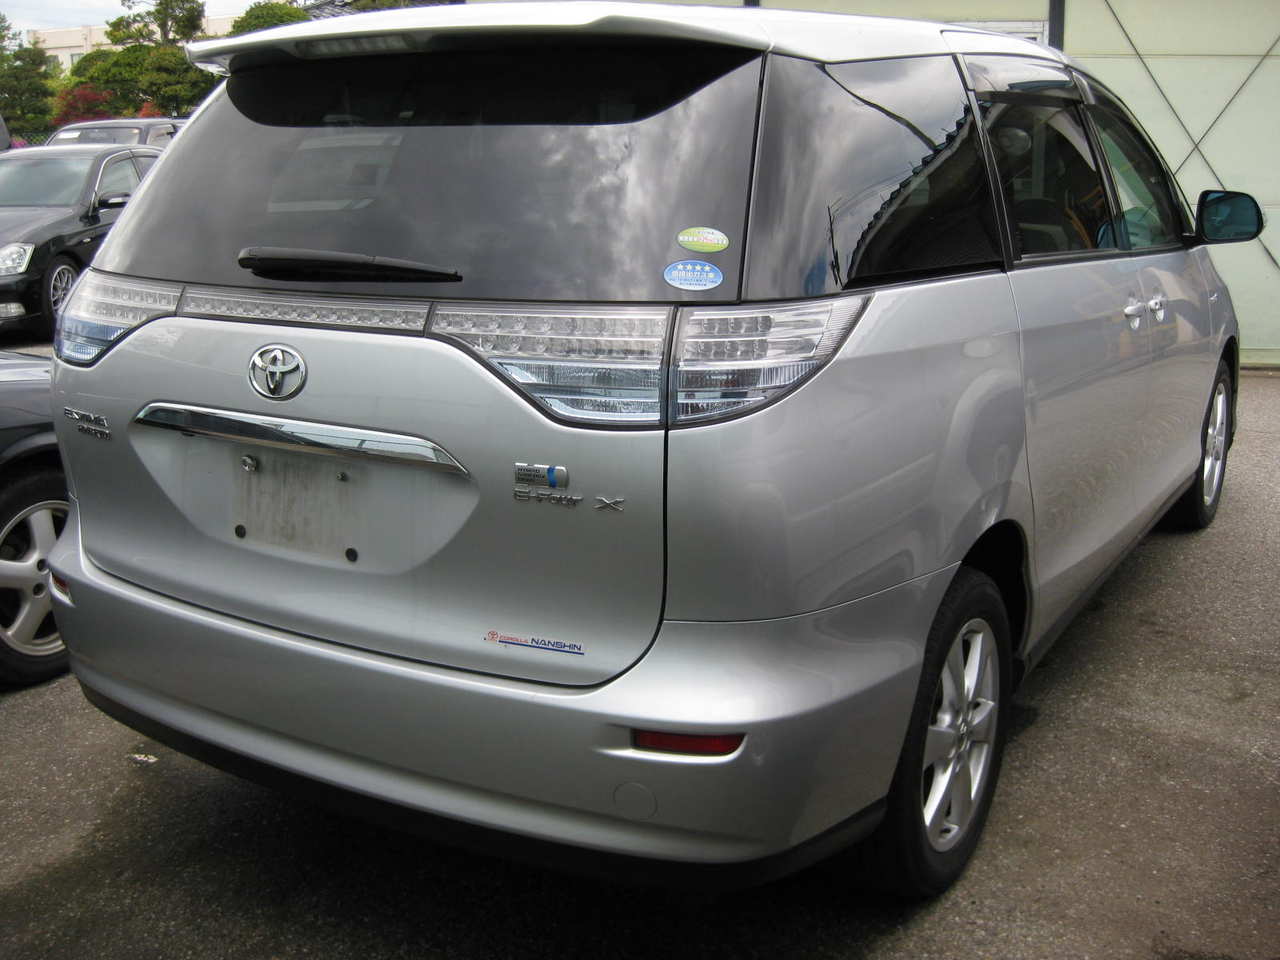 Продажа тойота эстима. Toyota Estima Hybrid 2008. Тайота истимс 2008гибрид. Toyota Estima Hybrid 2011. Toyota Estima Hybrid 2006.